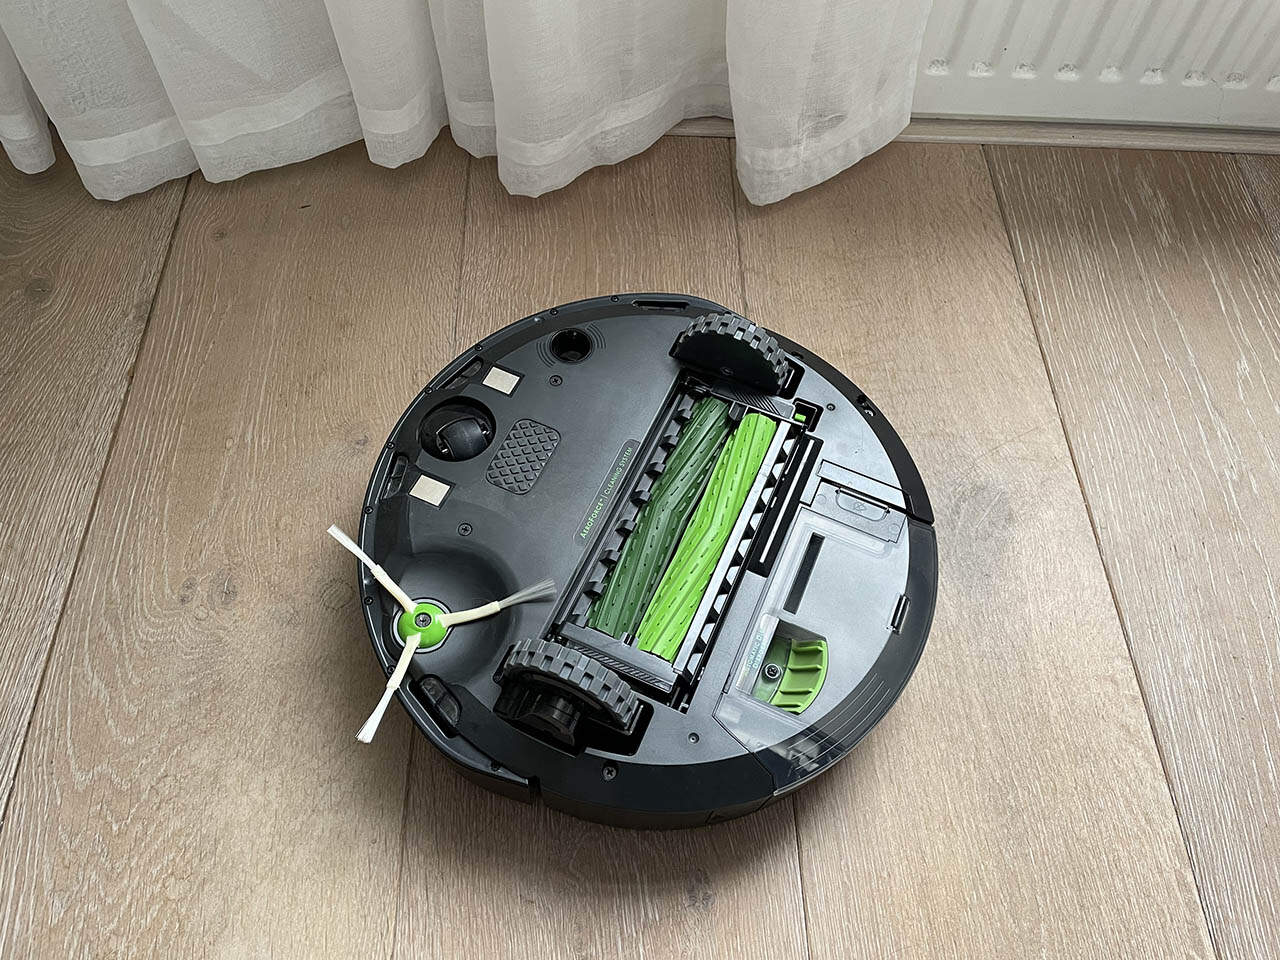 iRobot Roomba i3+ review